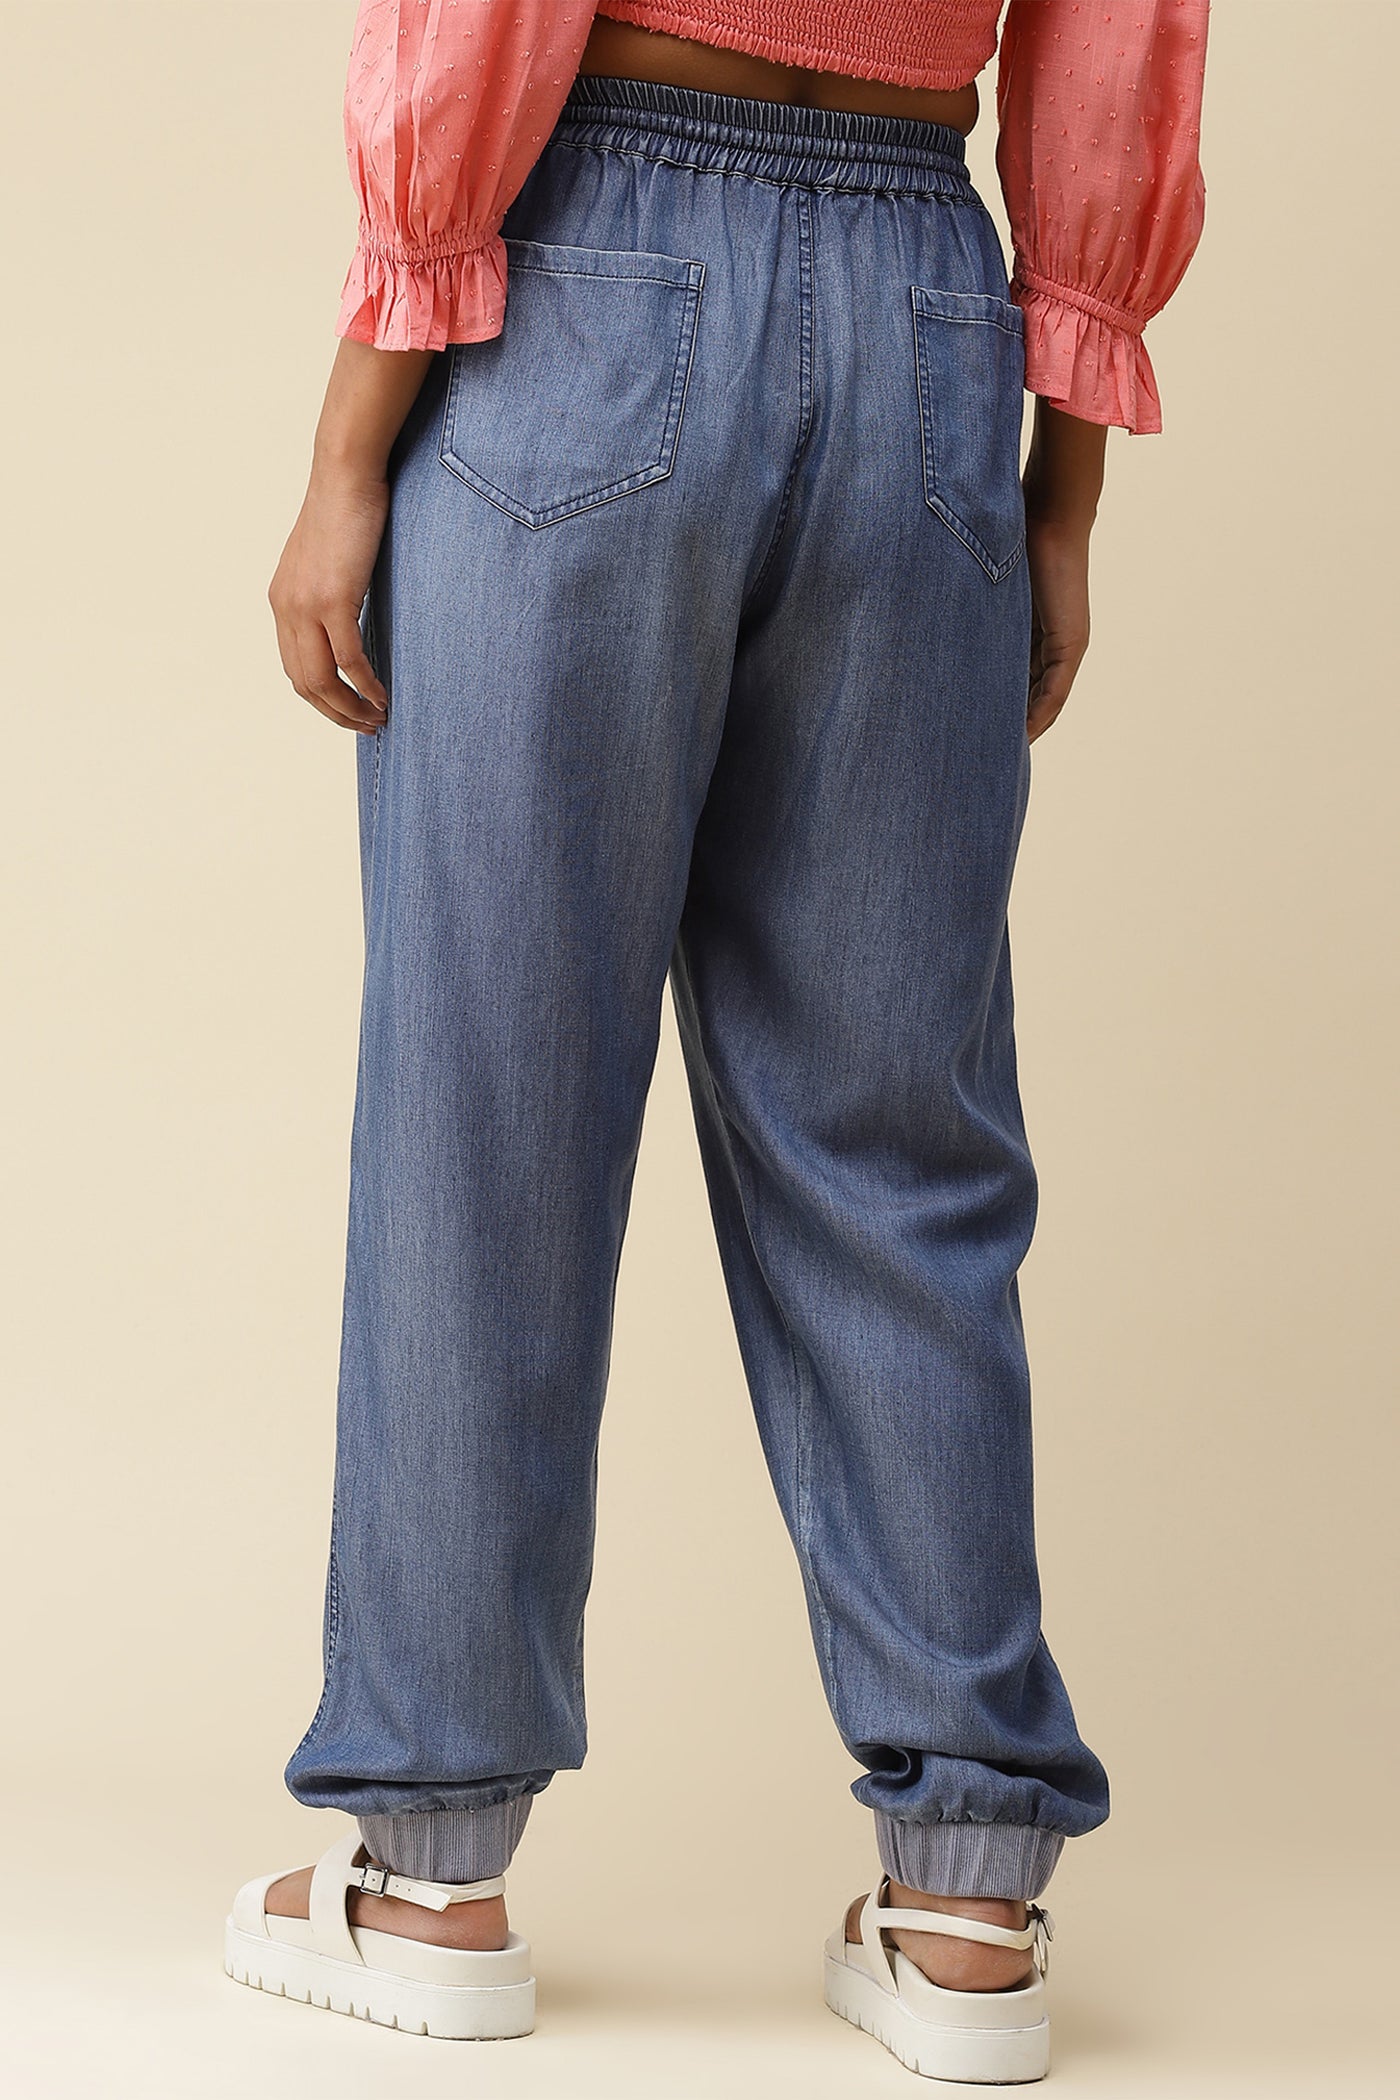 label ritu kumar indigo Blue Denim Pants western  designer wear online shopping melange singapore